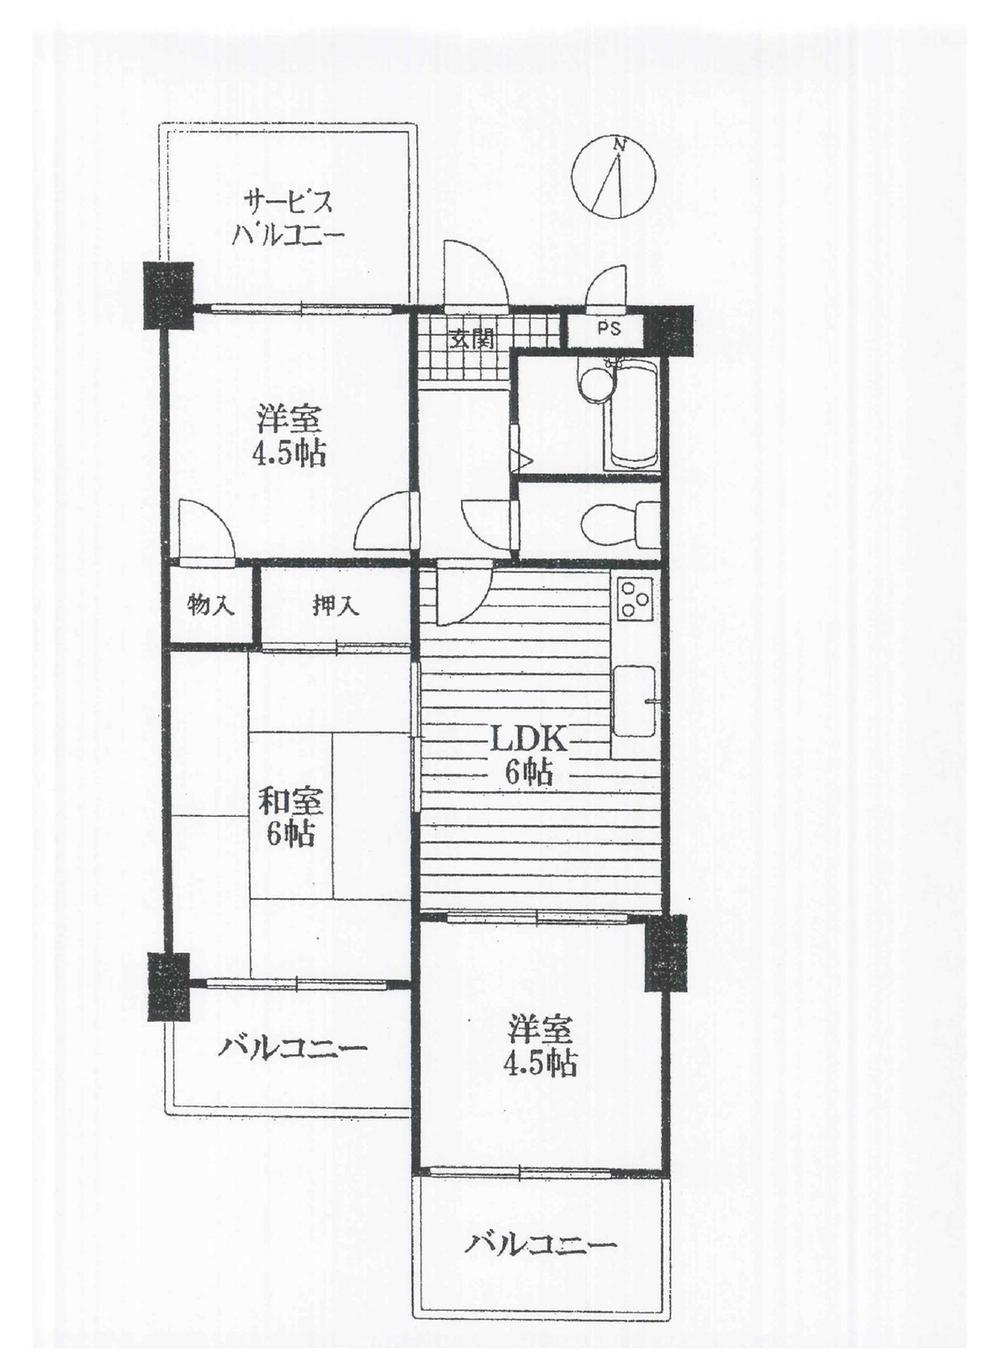 Floor plan. 3DK, Price 6.8 million yen, Occupied area 43.44 sq m , Balcony area 7.25 sq m